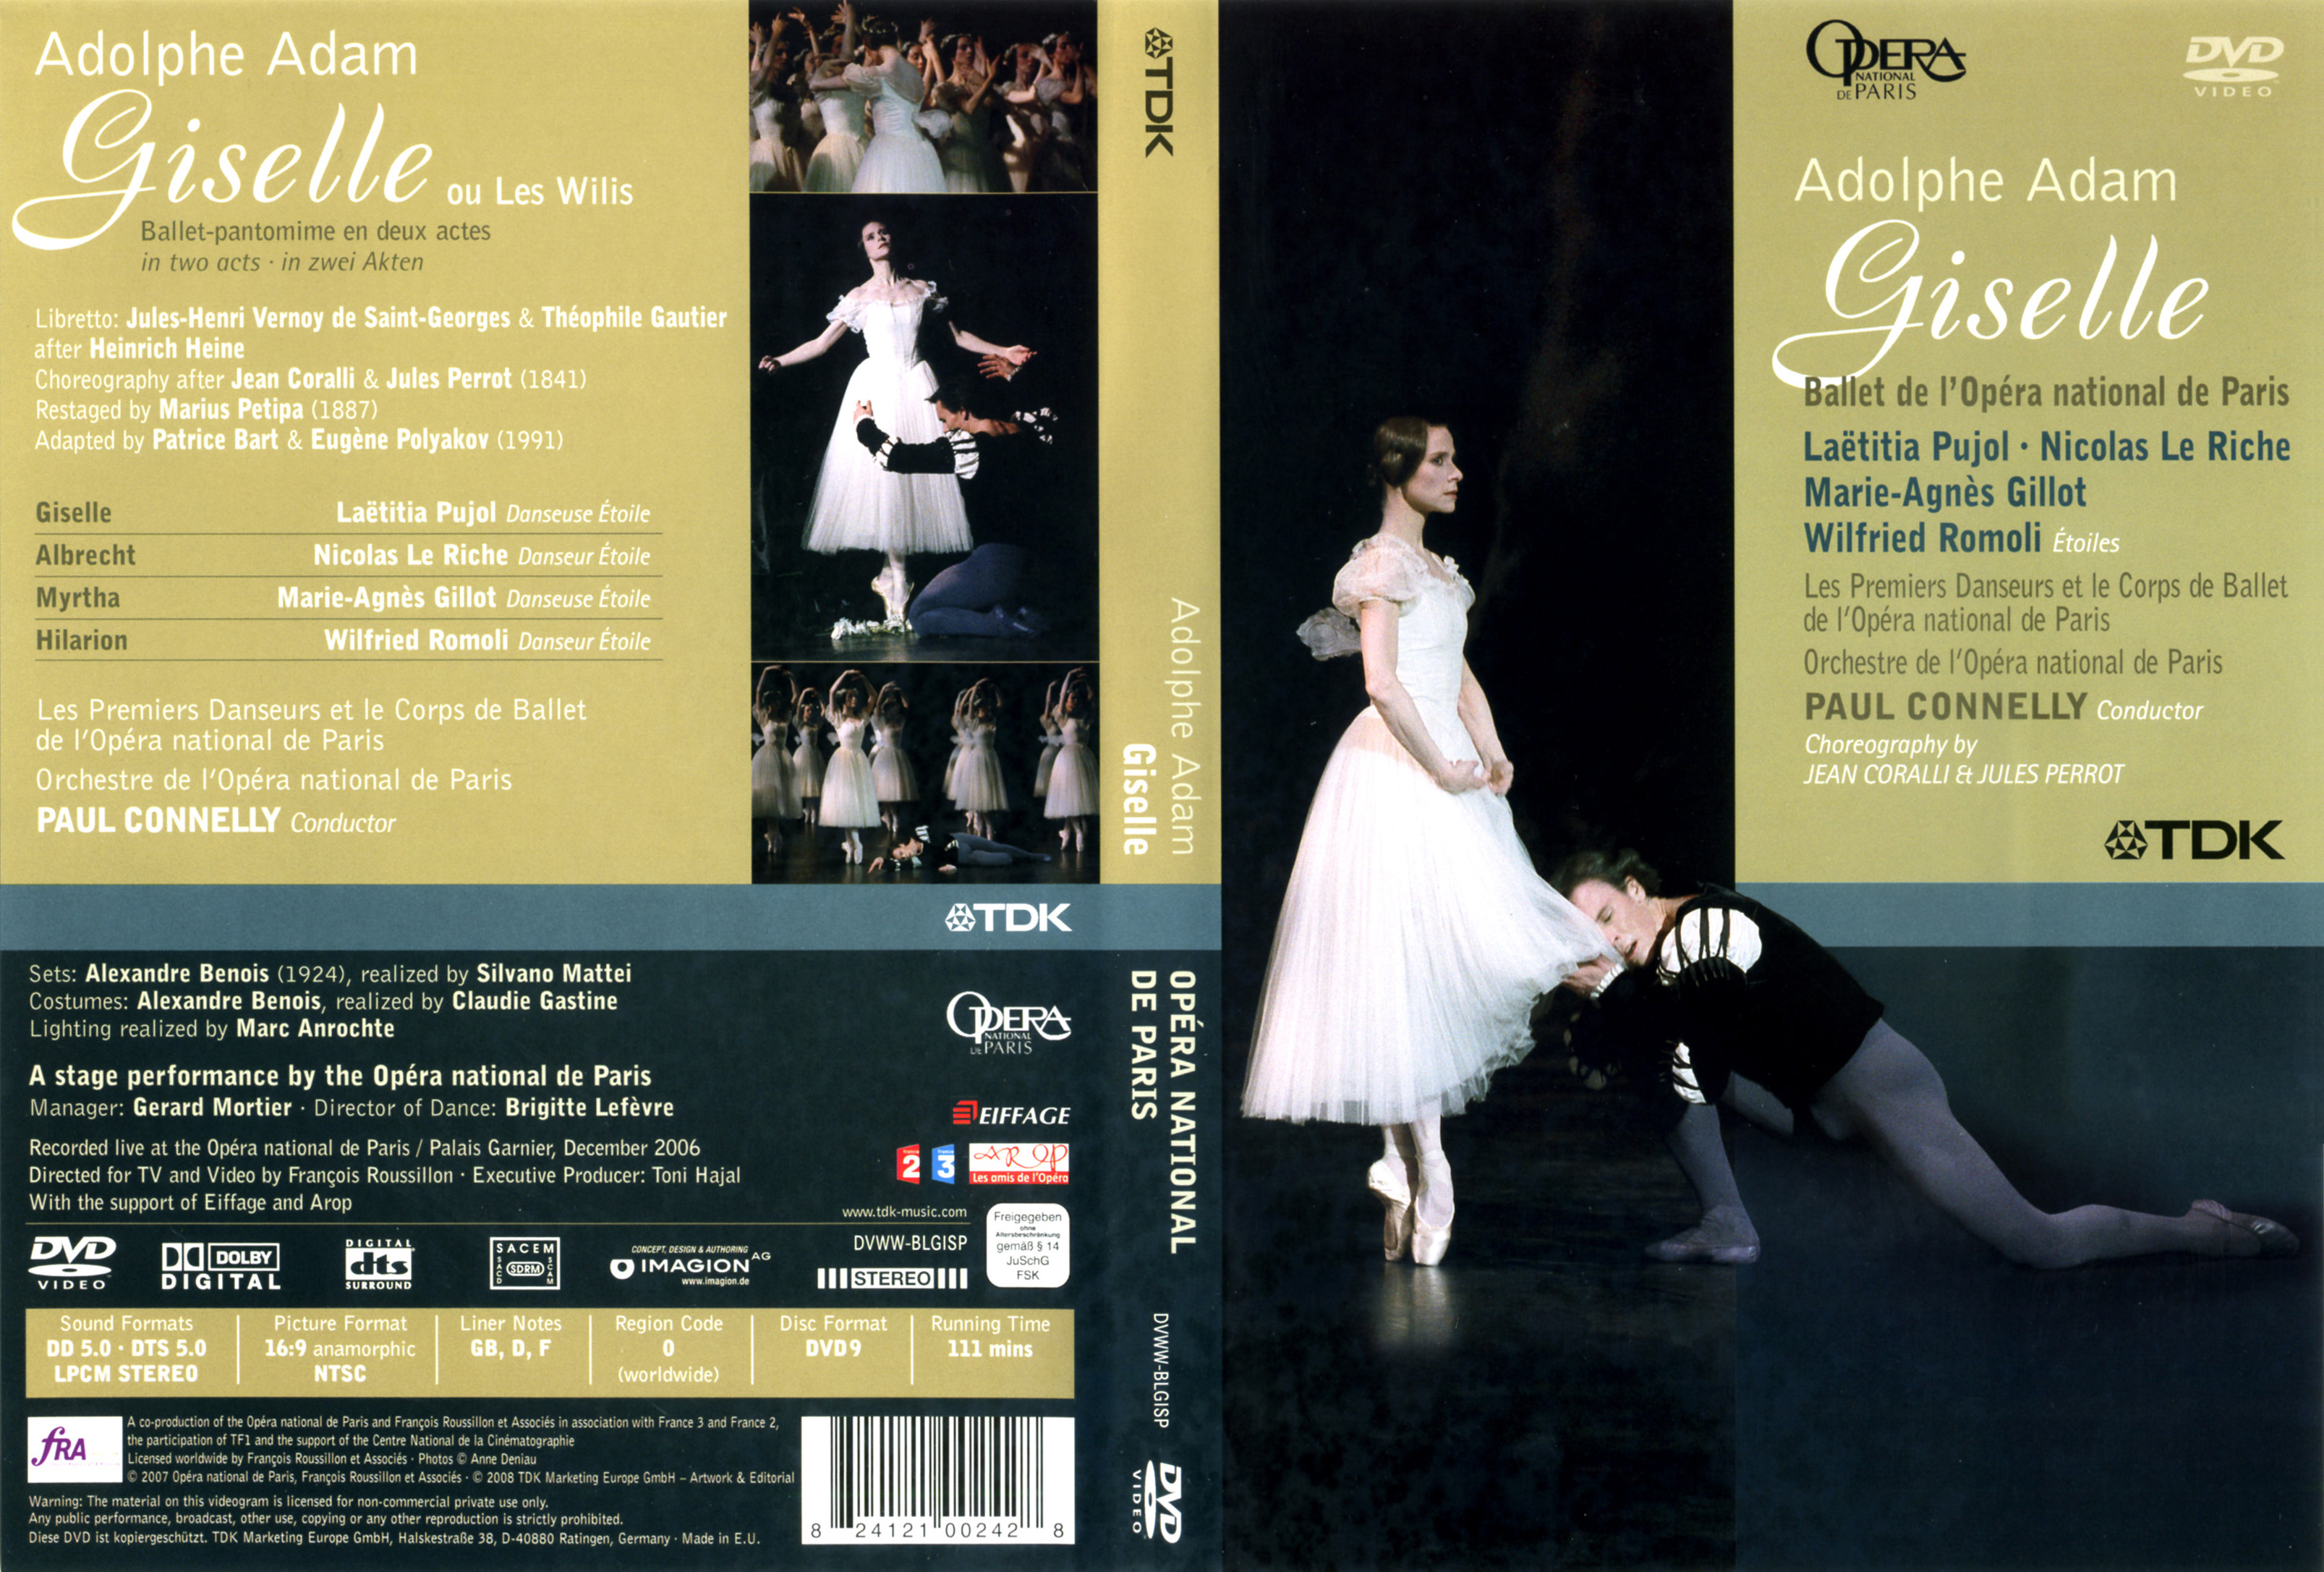 Jaquette DVD Giselle